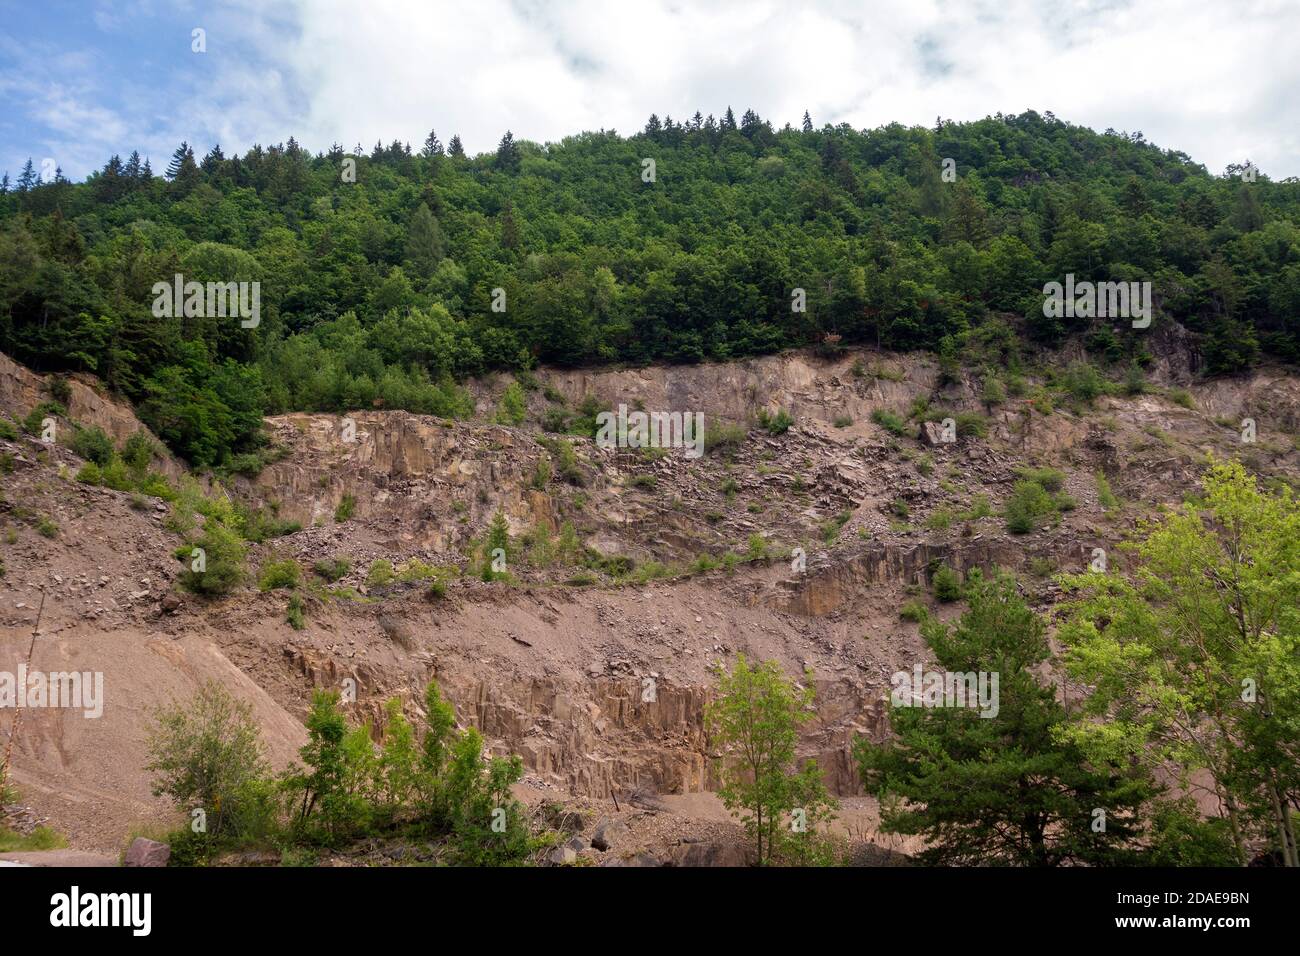 Porphyry Quarry at Cembra, Trentino - Südtirol, Italy Stock Photo